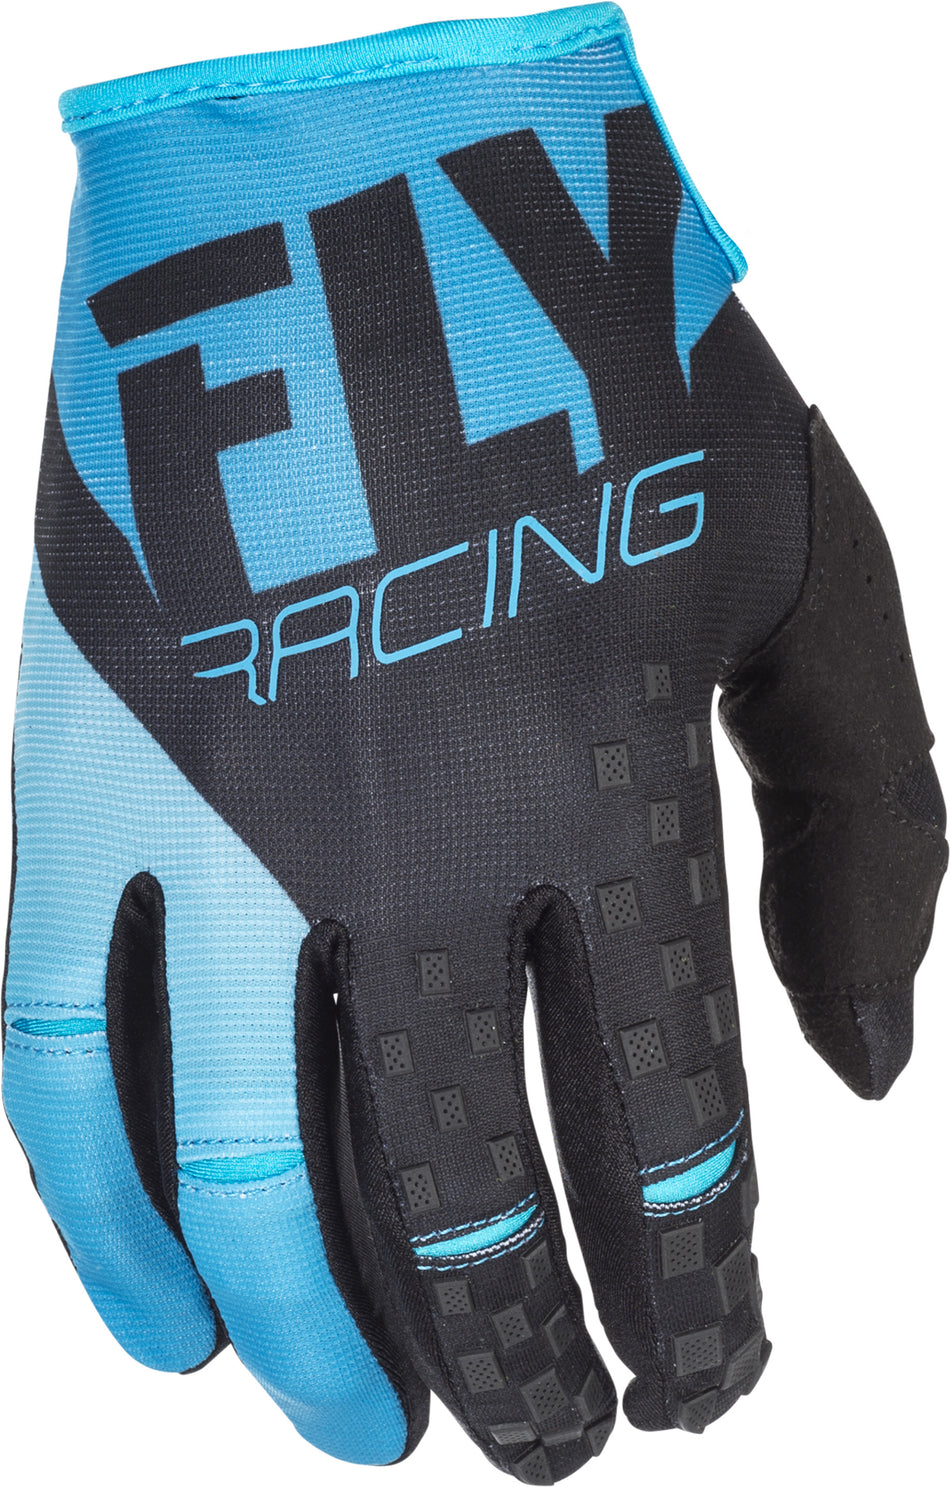 FLY RACING Kinetic Gloves Blue/Black Sz 11 371-41111